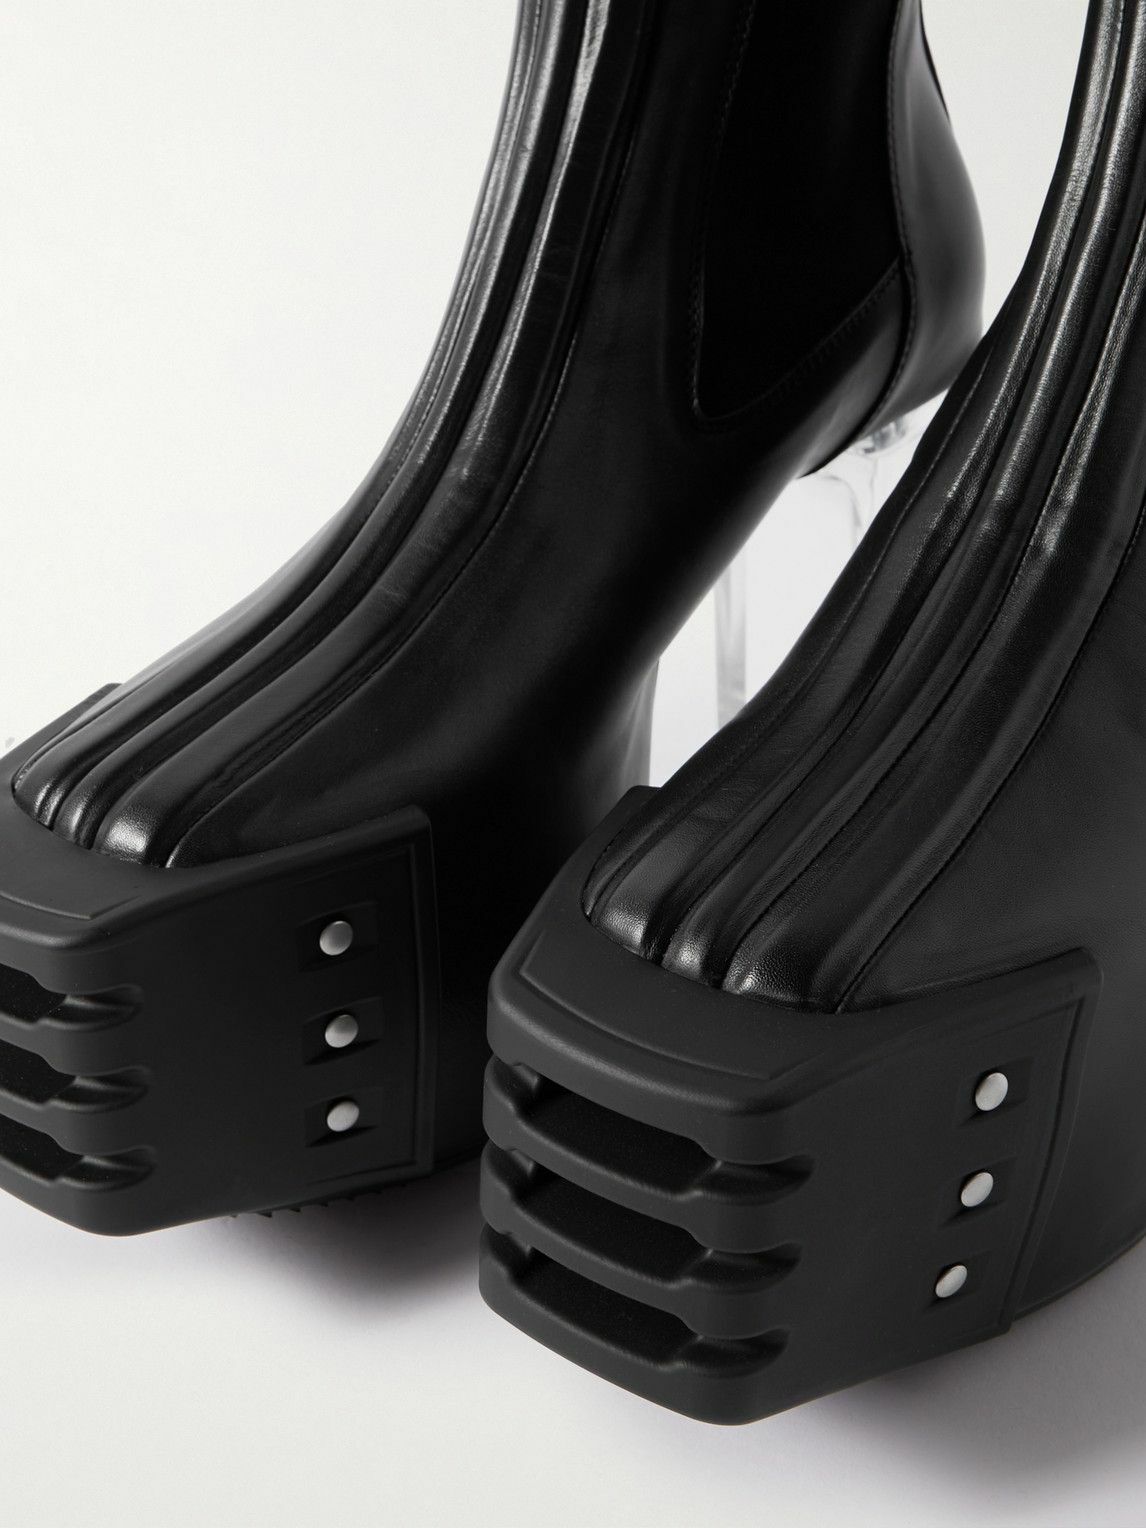 Rick Owens - Leather Platform Boots - Black